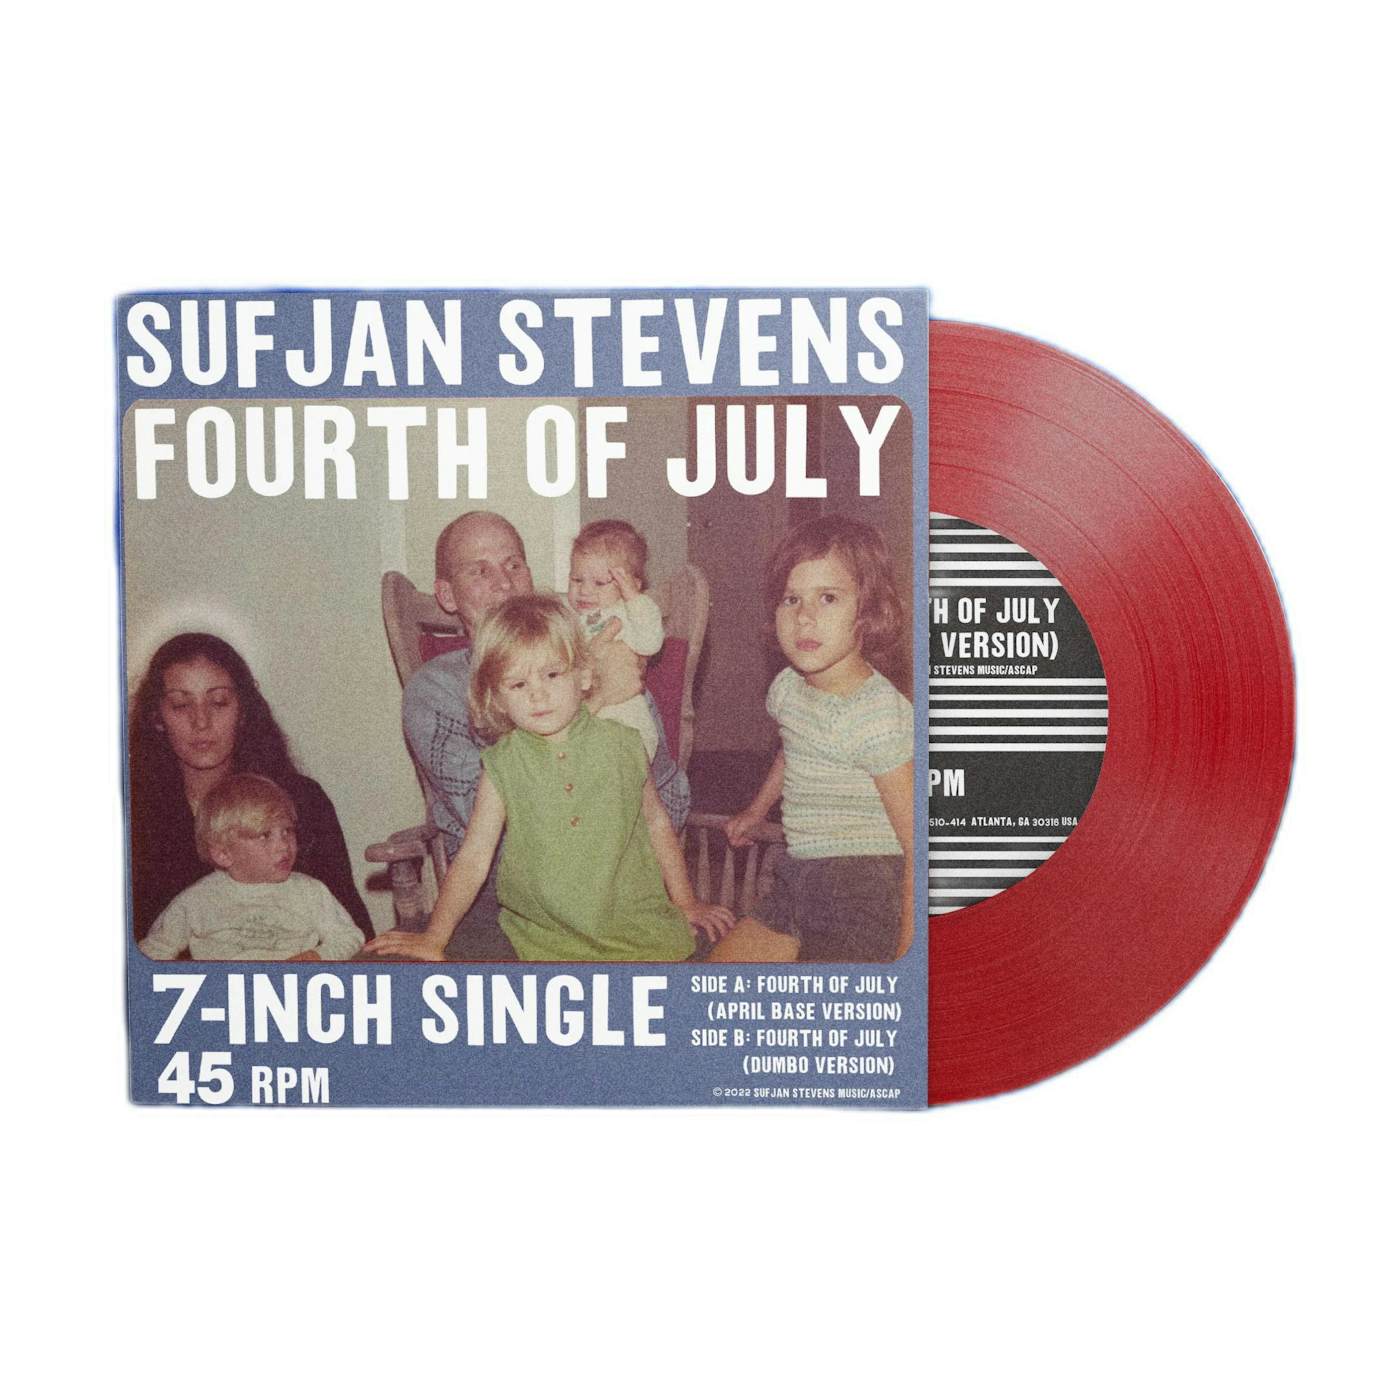 Caius screech reparere Sufjan Stevens Fourth of July (Red) Vinyl Record